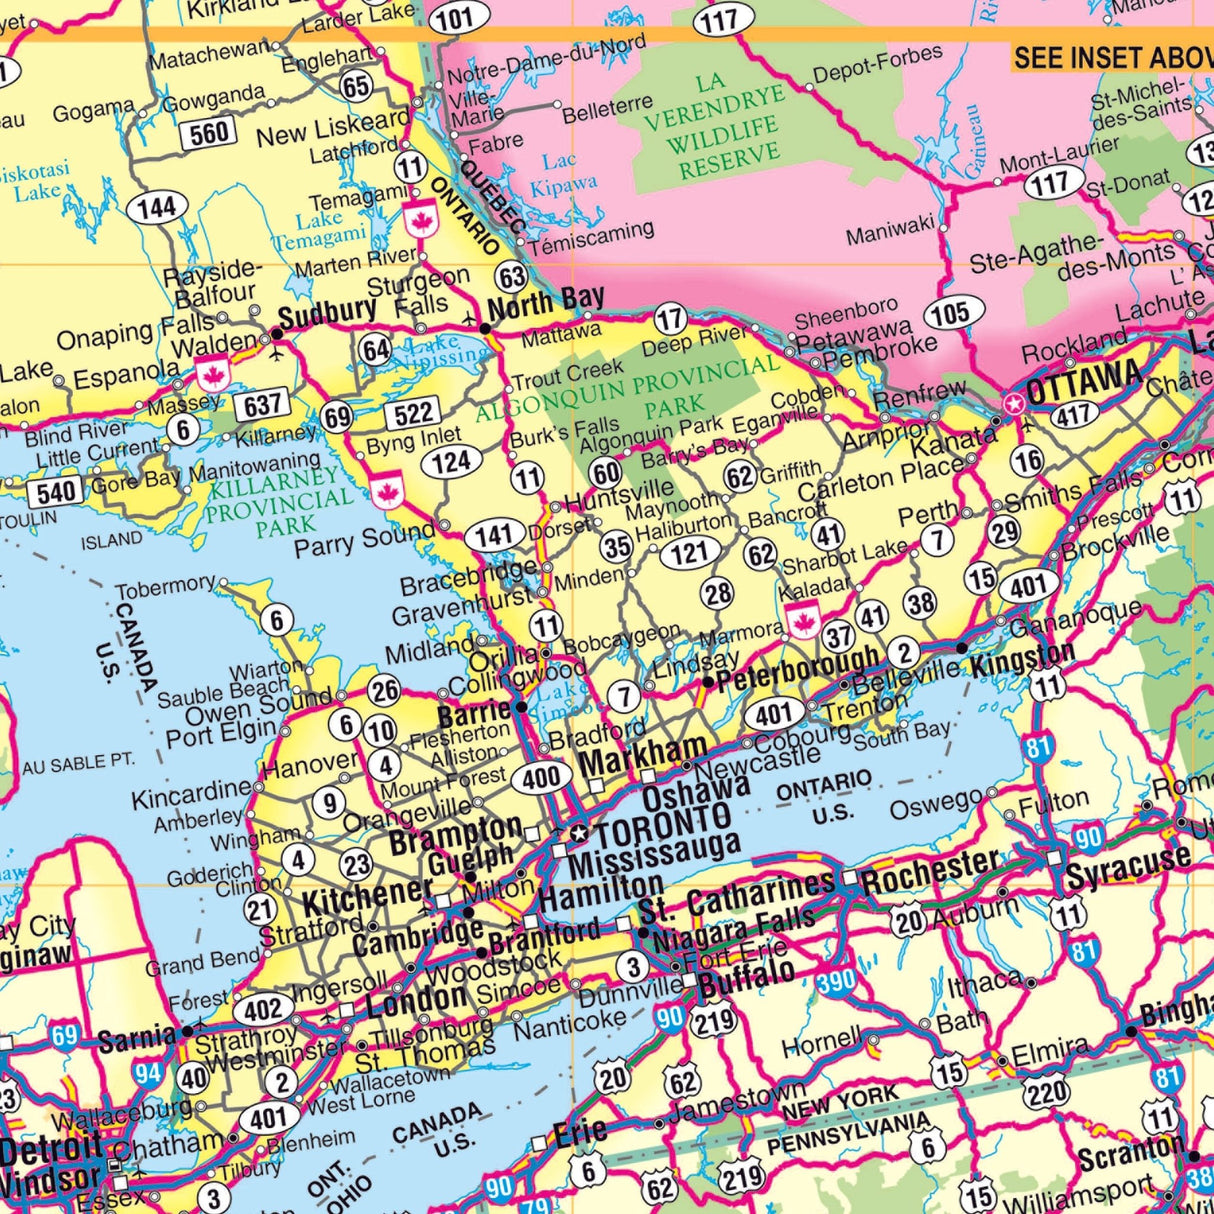 Canada Wall Map - KA-CANADA-WALL-62X42-PAPER - Ultimate Globes